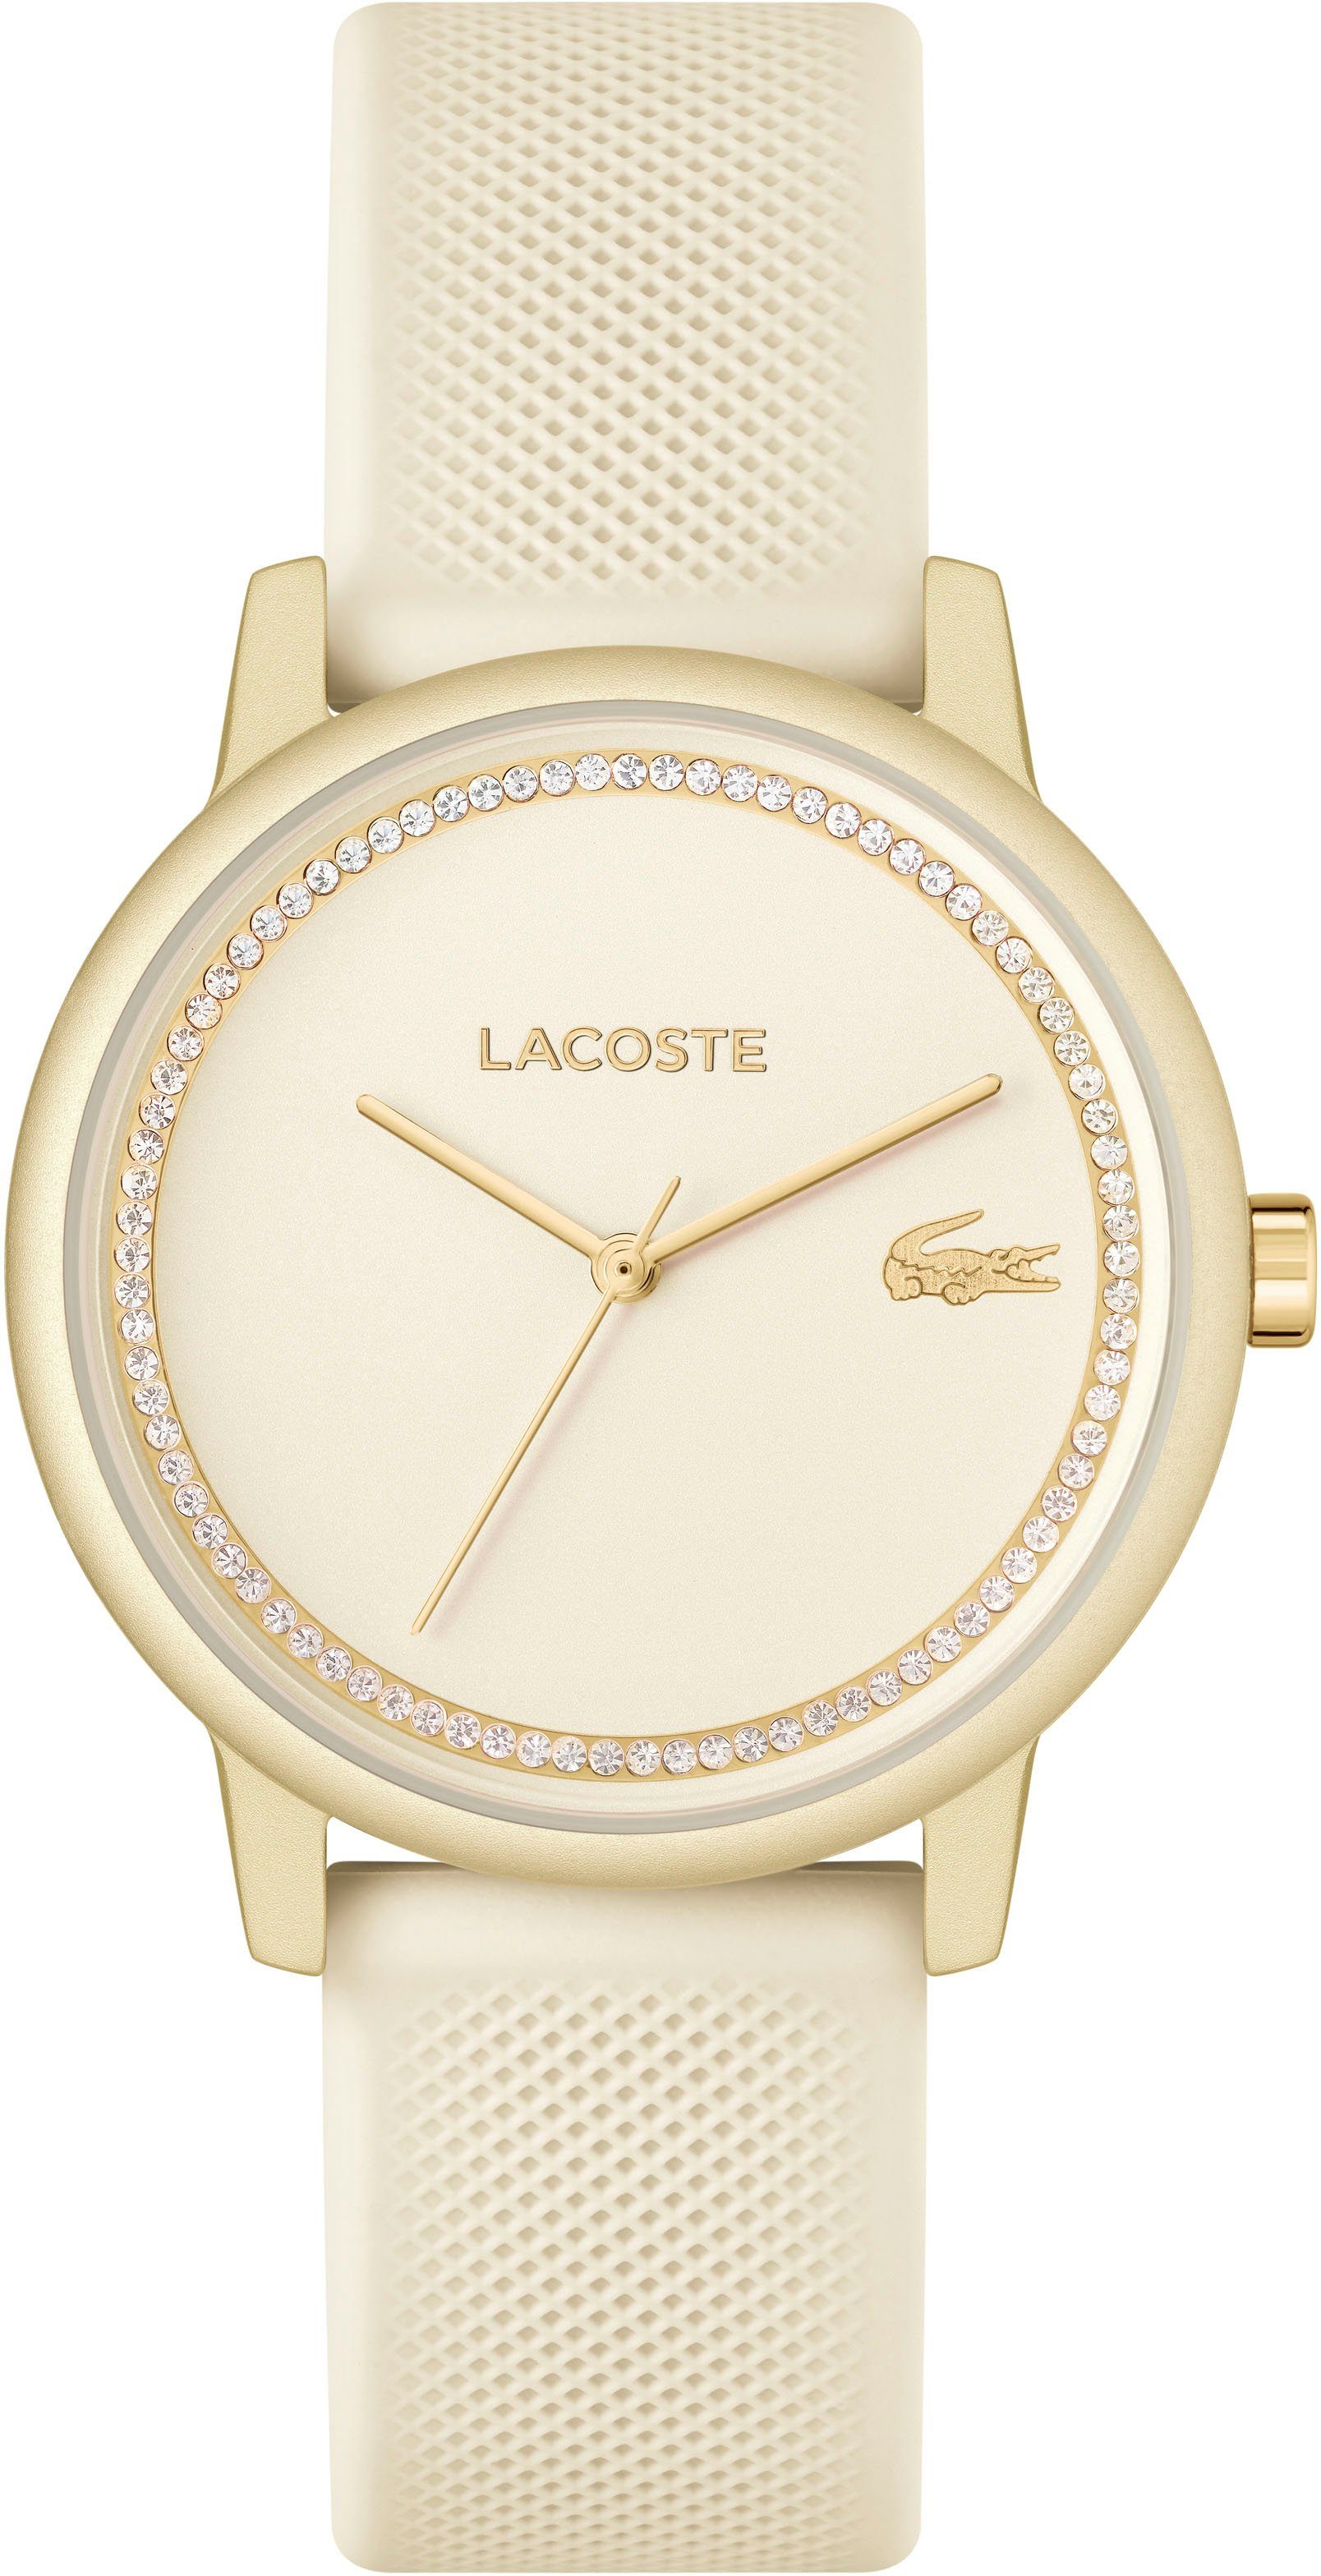 Uhren Gold » Lacoste OTTO Lacoste kaufen | Goldene Uhren